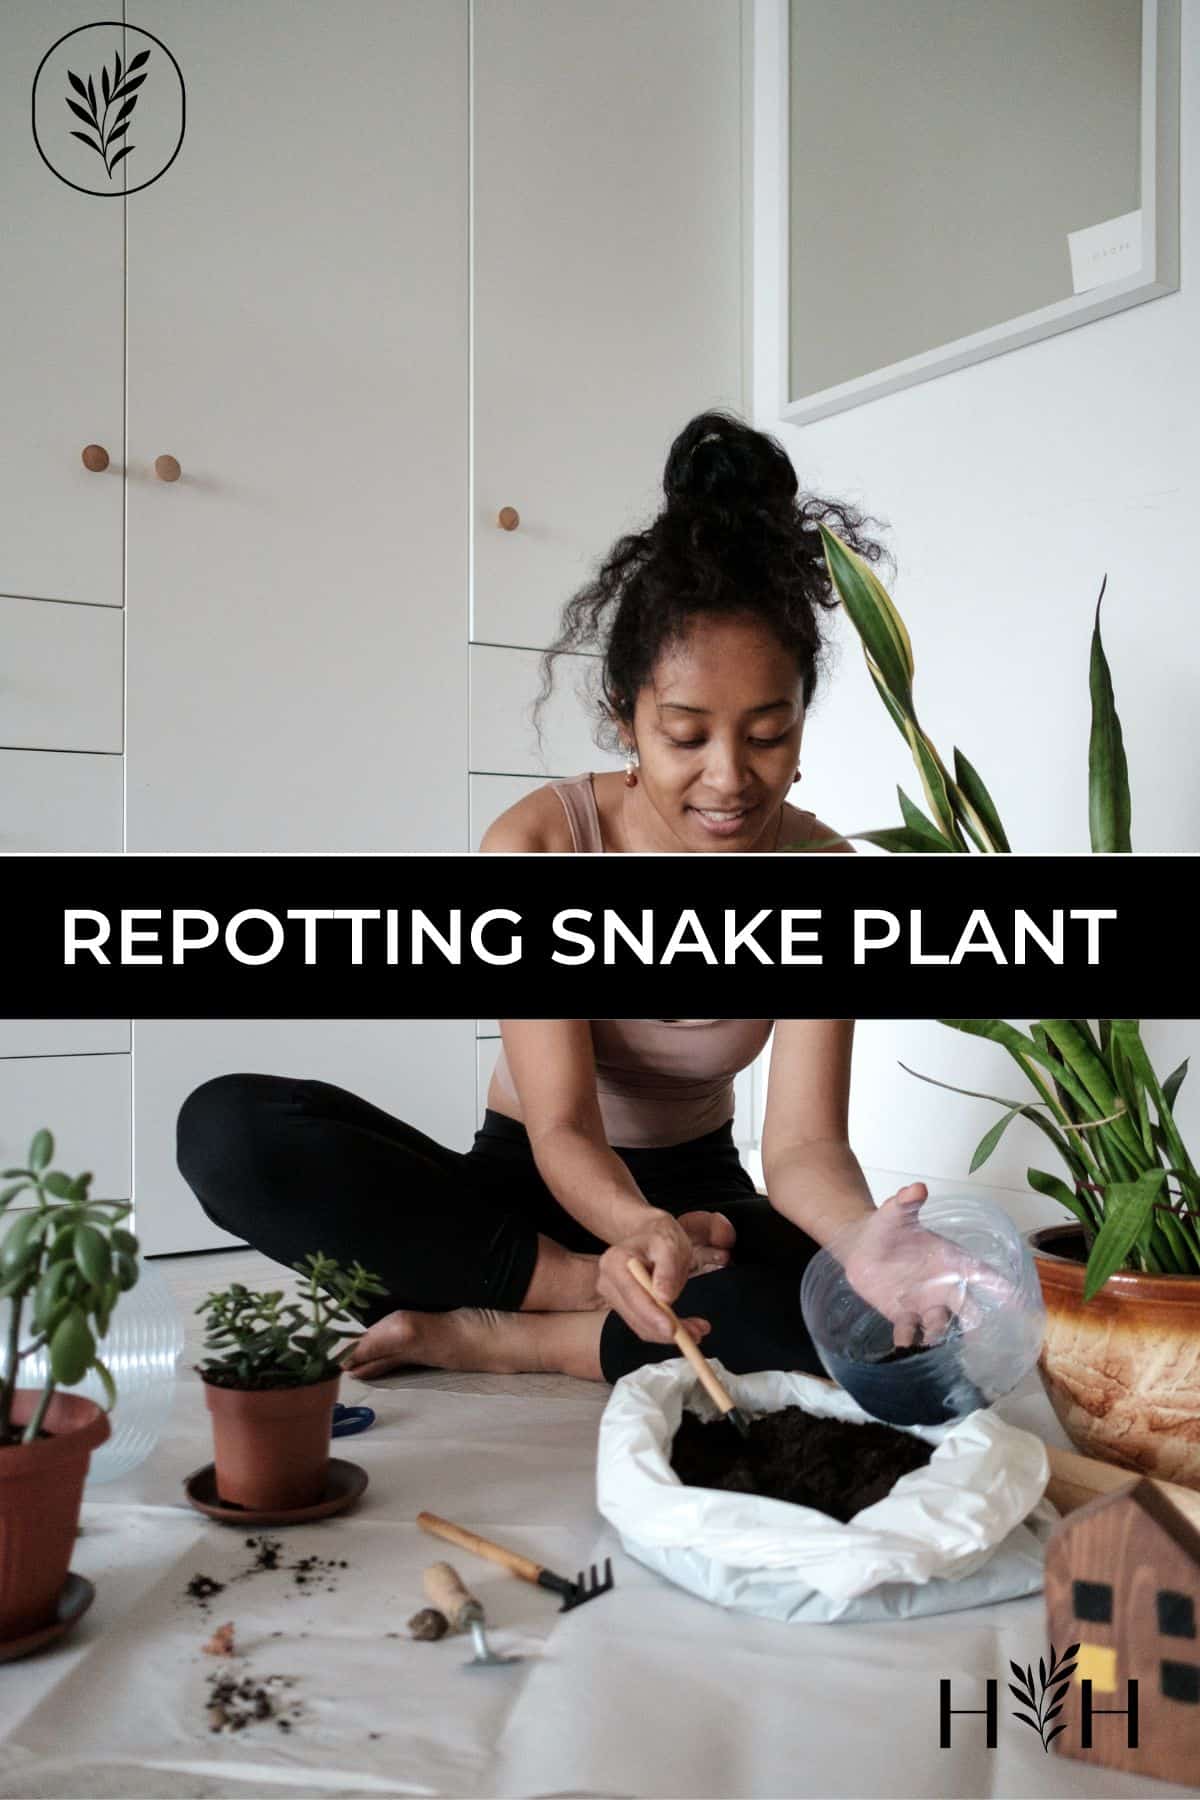 Repotting snake plant via @home4theharvest